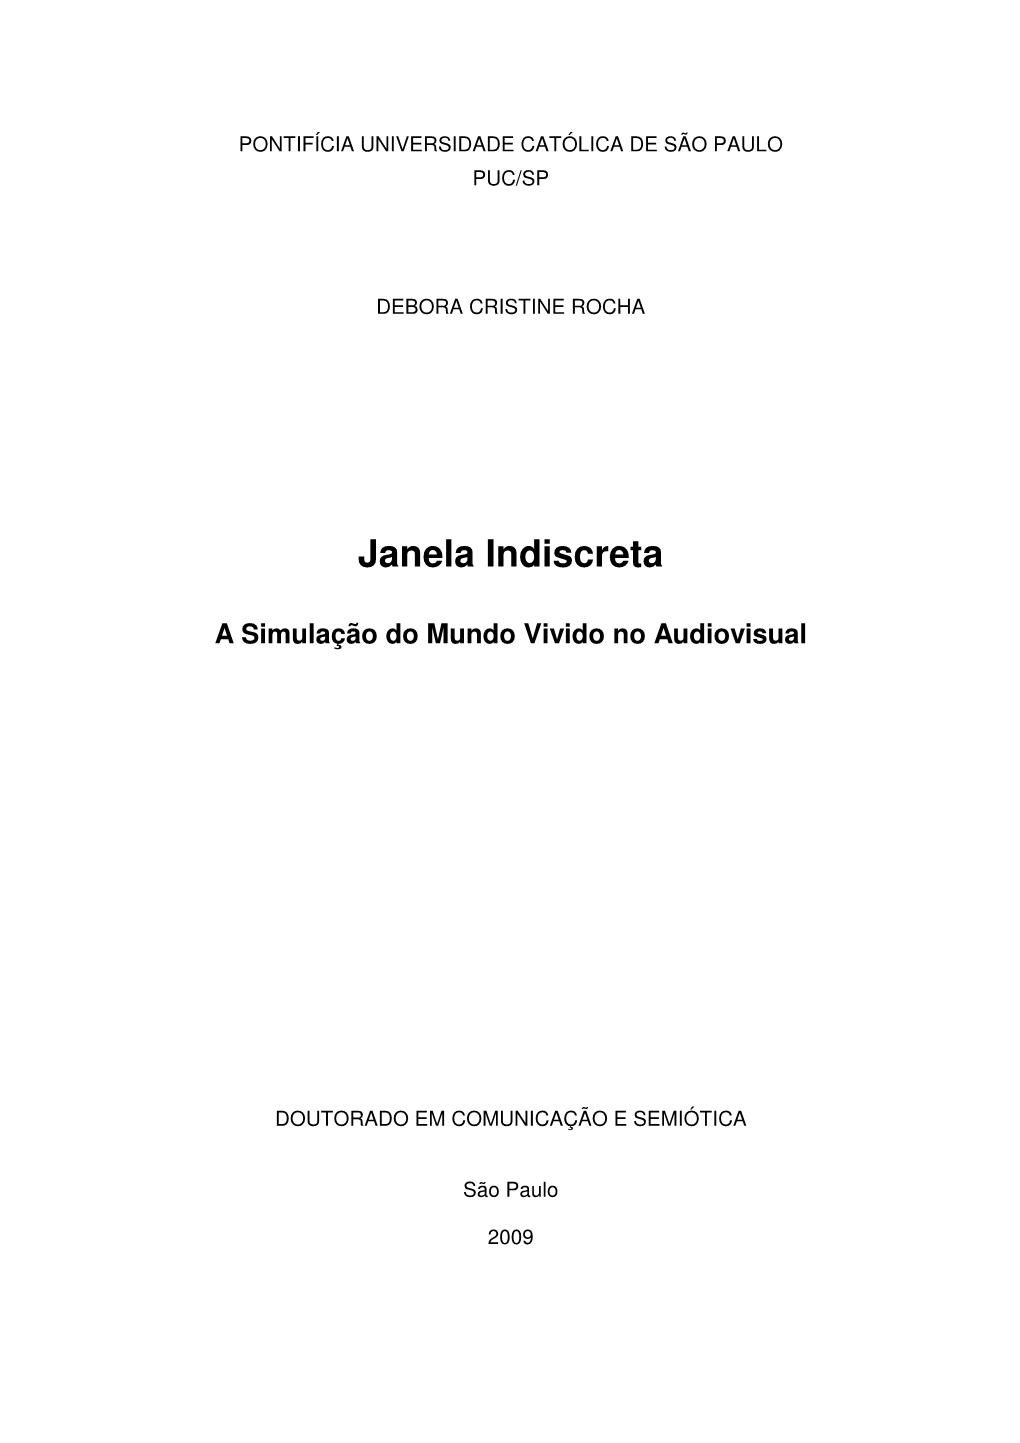 Janela Indiscreta